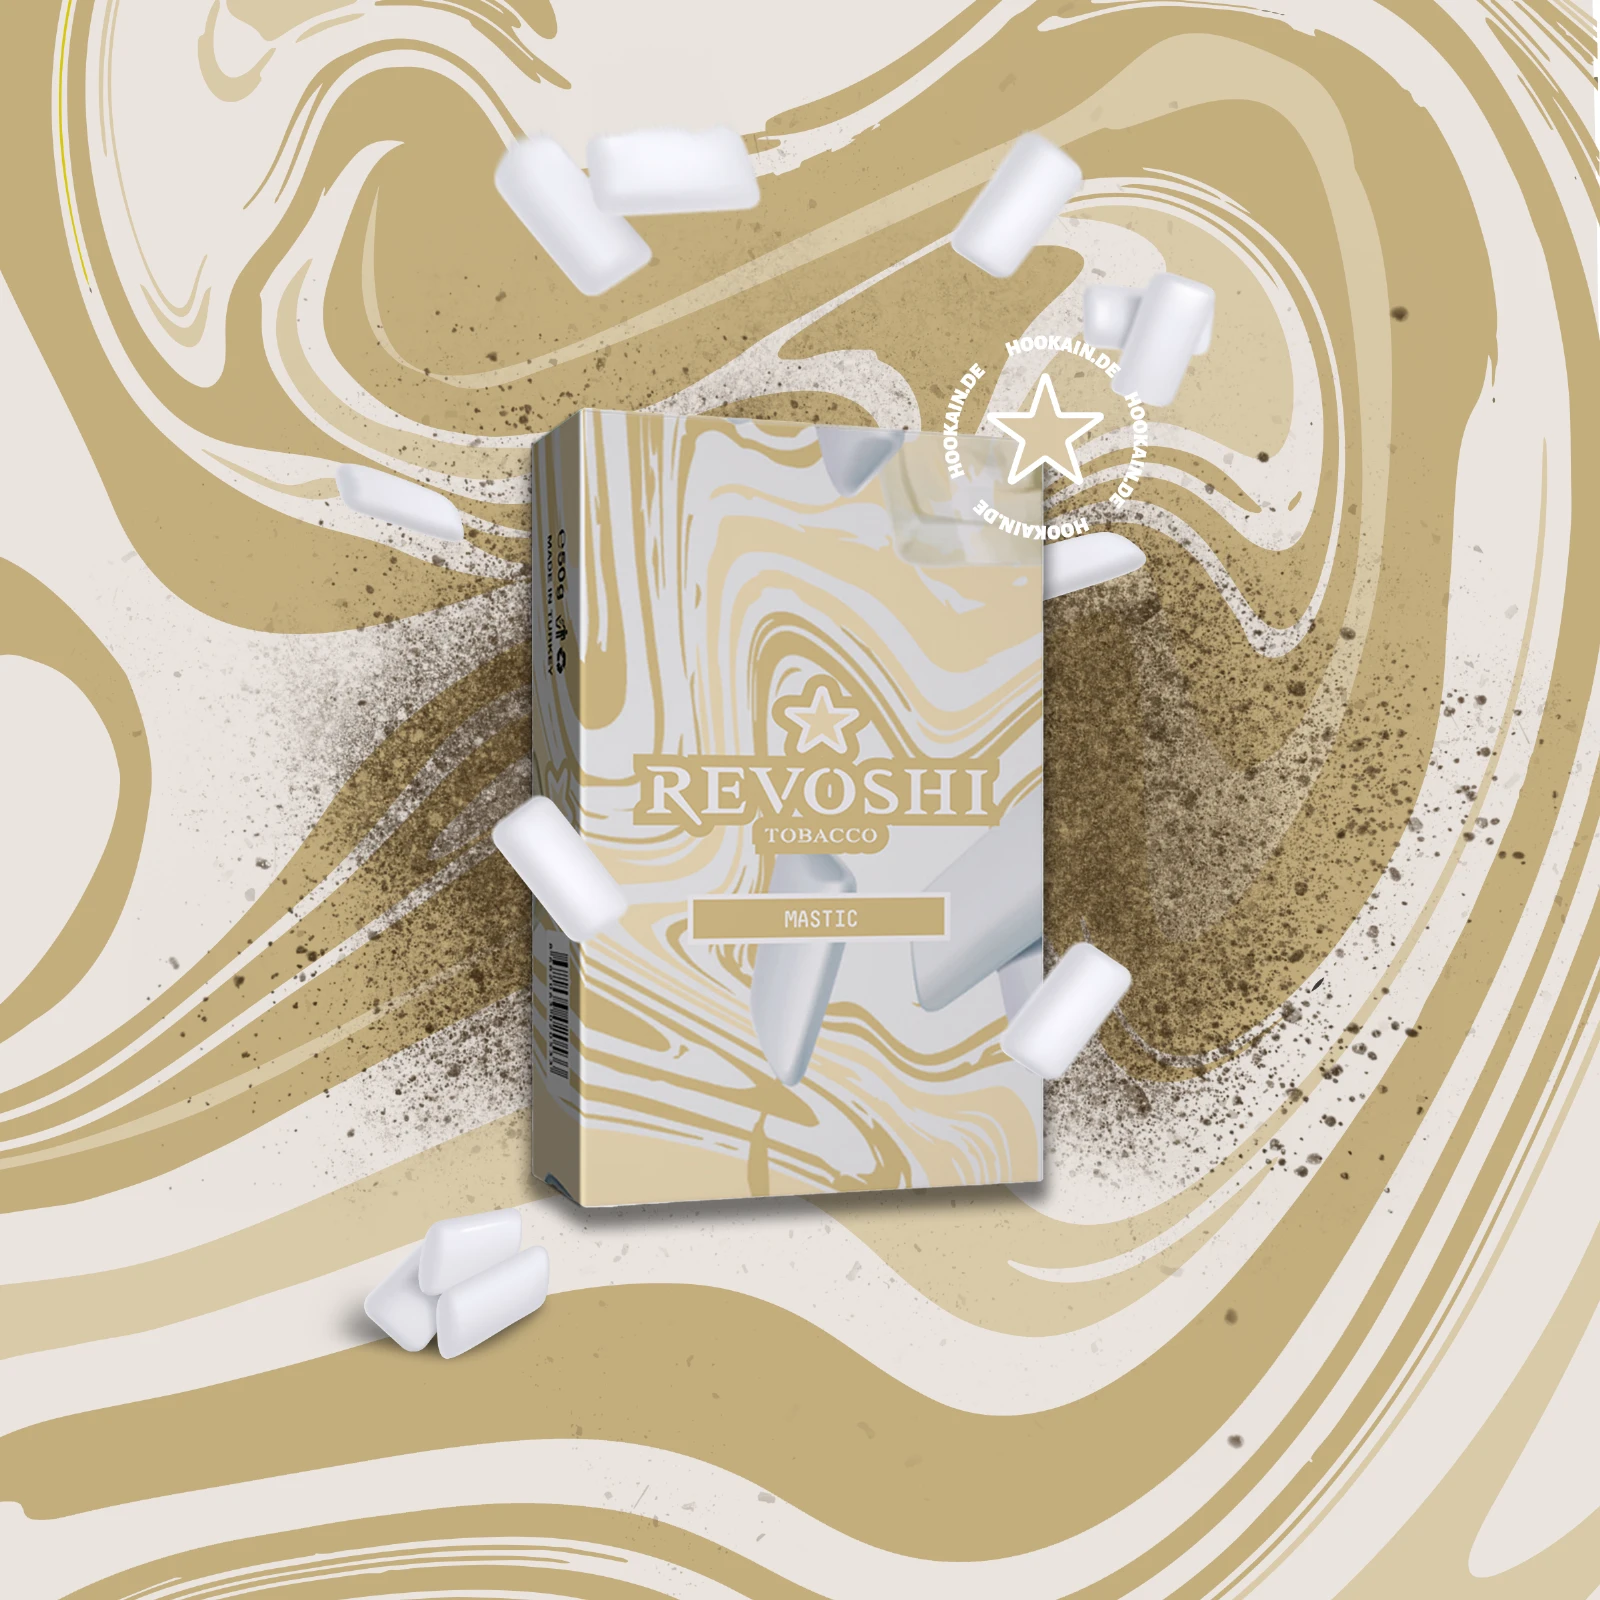 Revoshi - Mstc - 20 g | Revoshi Tobacco alle neuen Sorten kaufen